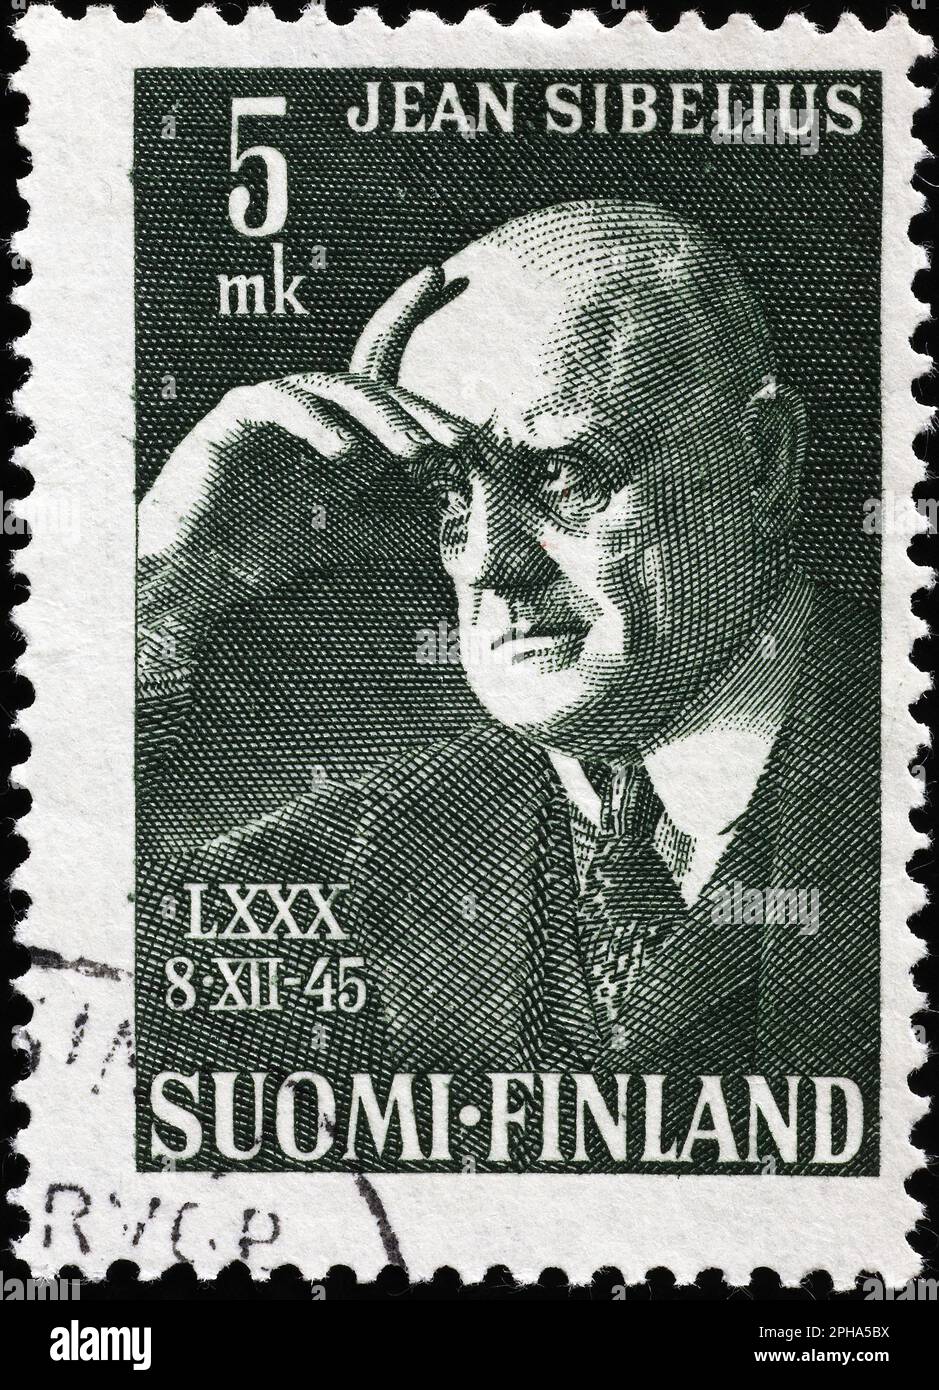 Jean Sibelius portrait on finnish postage stamp Stock Photo